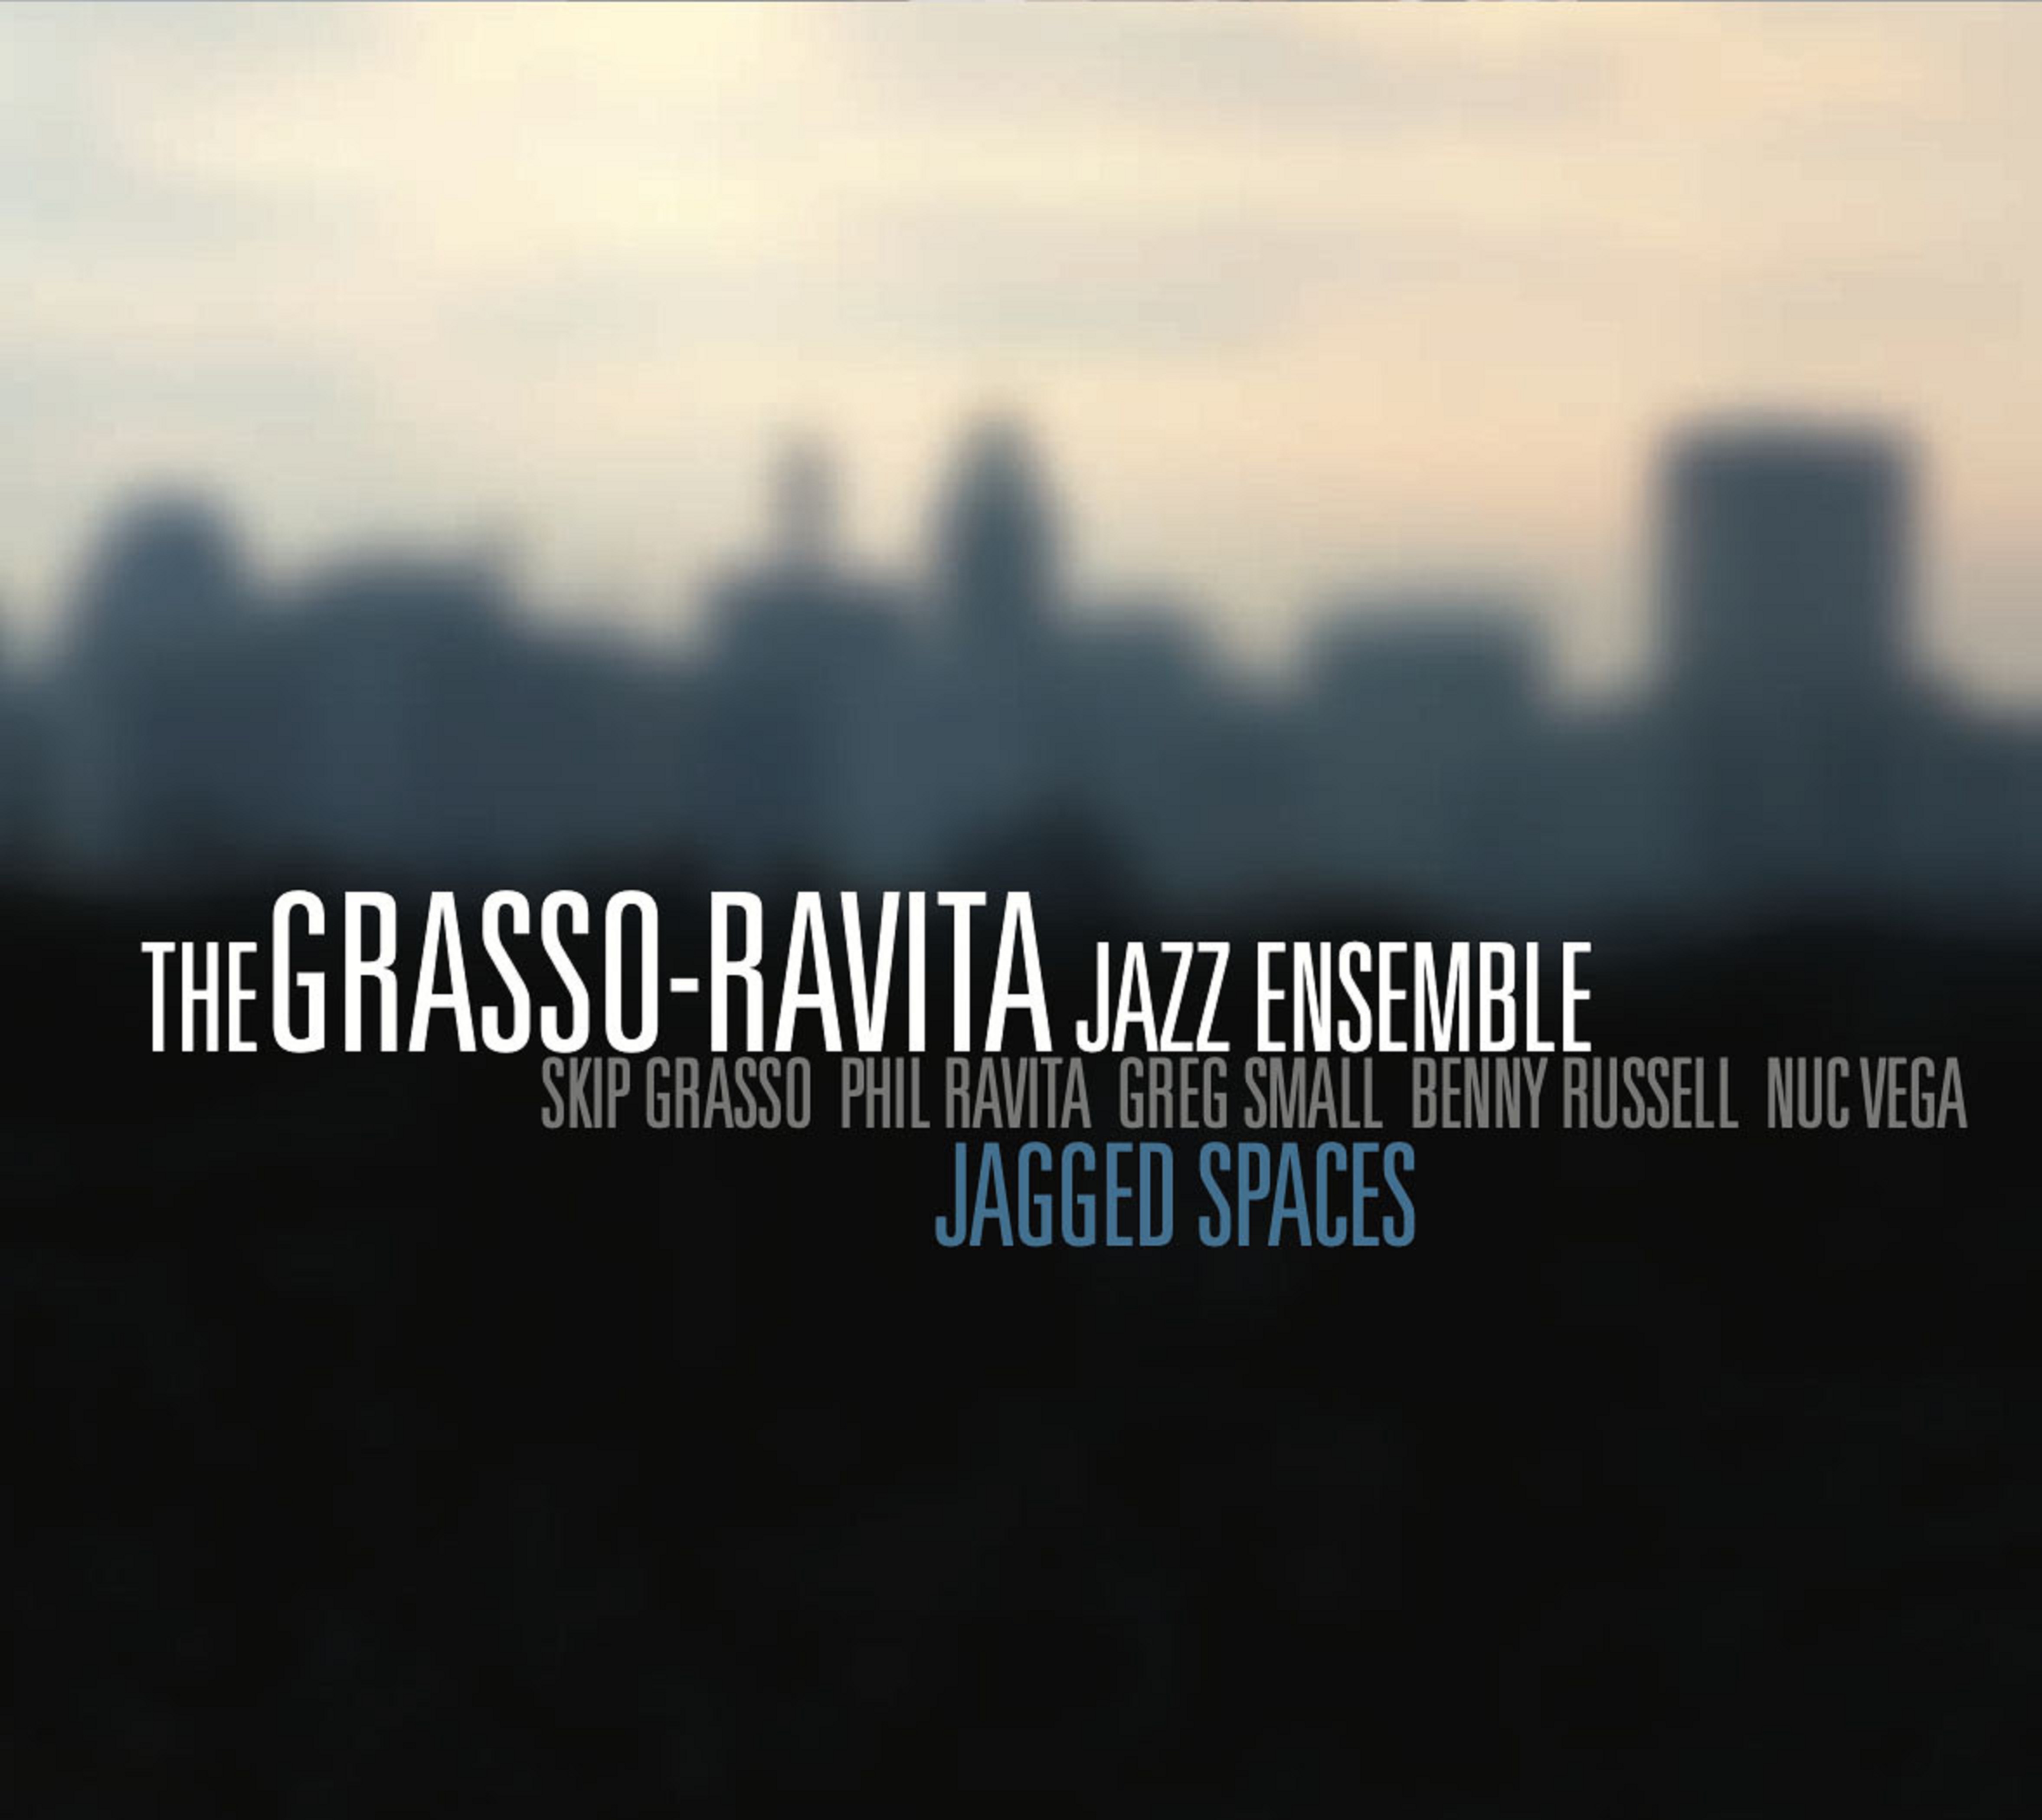 The Grasso-Ravita Jazz Ensemble “Jagged Spaces” Live Stream